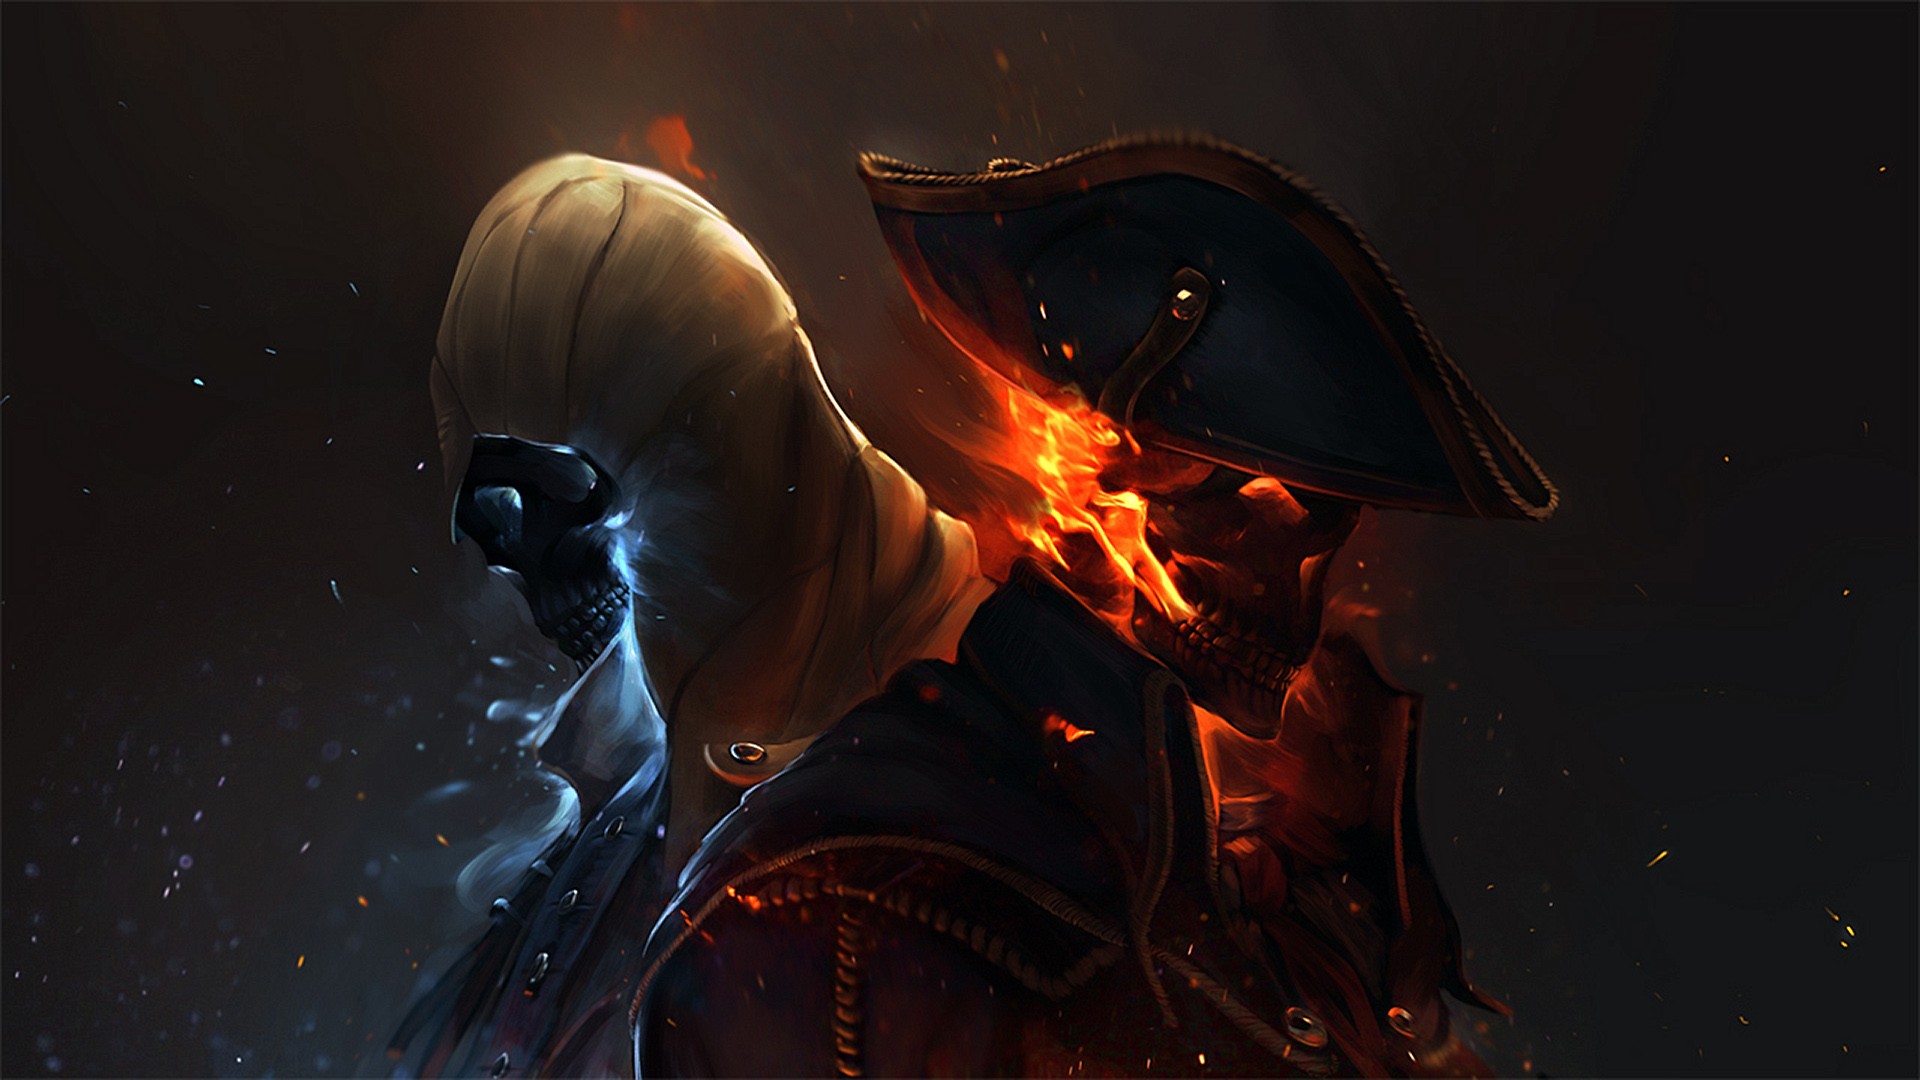  Pirate Skull Fire Drawing dark flames warrior wallpaper background